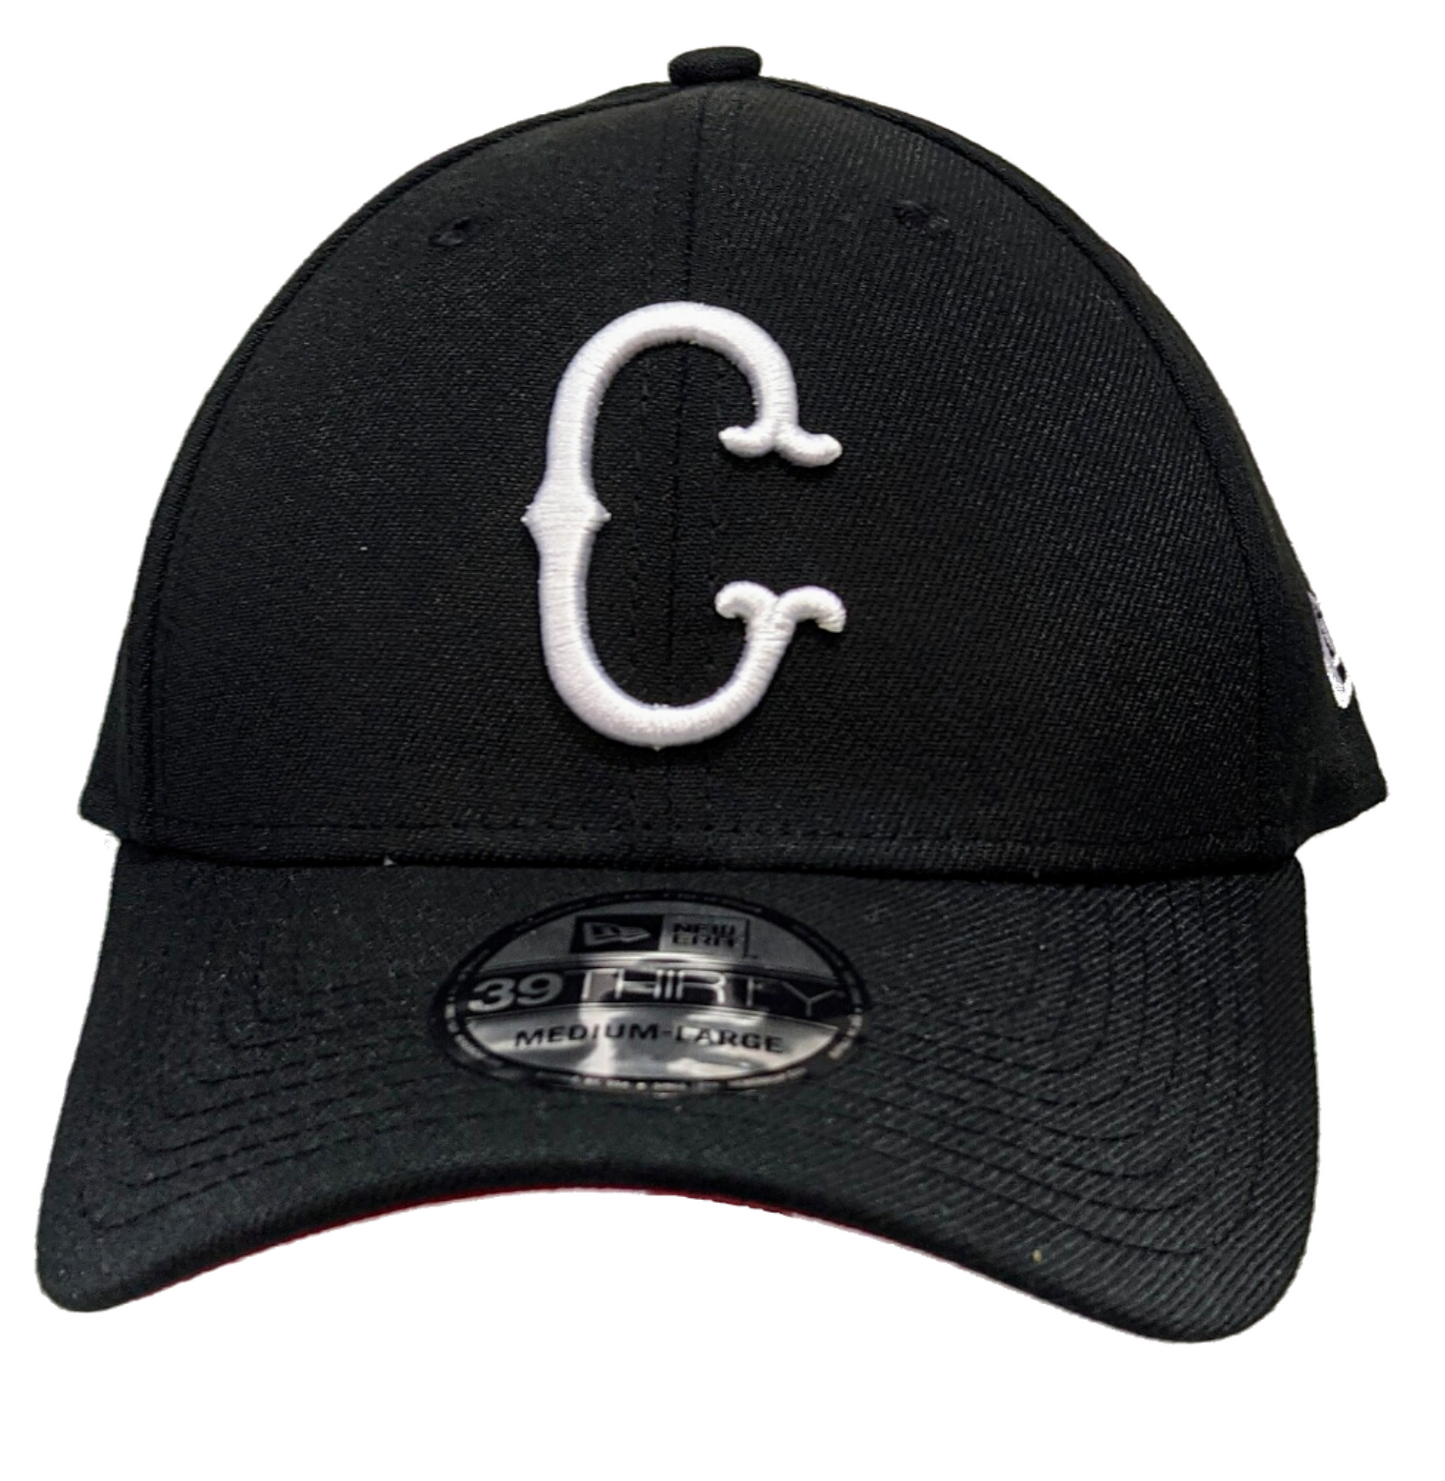 Chicago White Sox 1950 All Star Game Black 39THIRTY Flex Fit New Era Hat